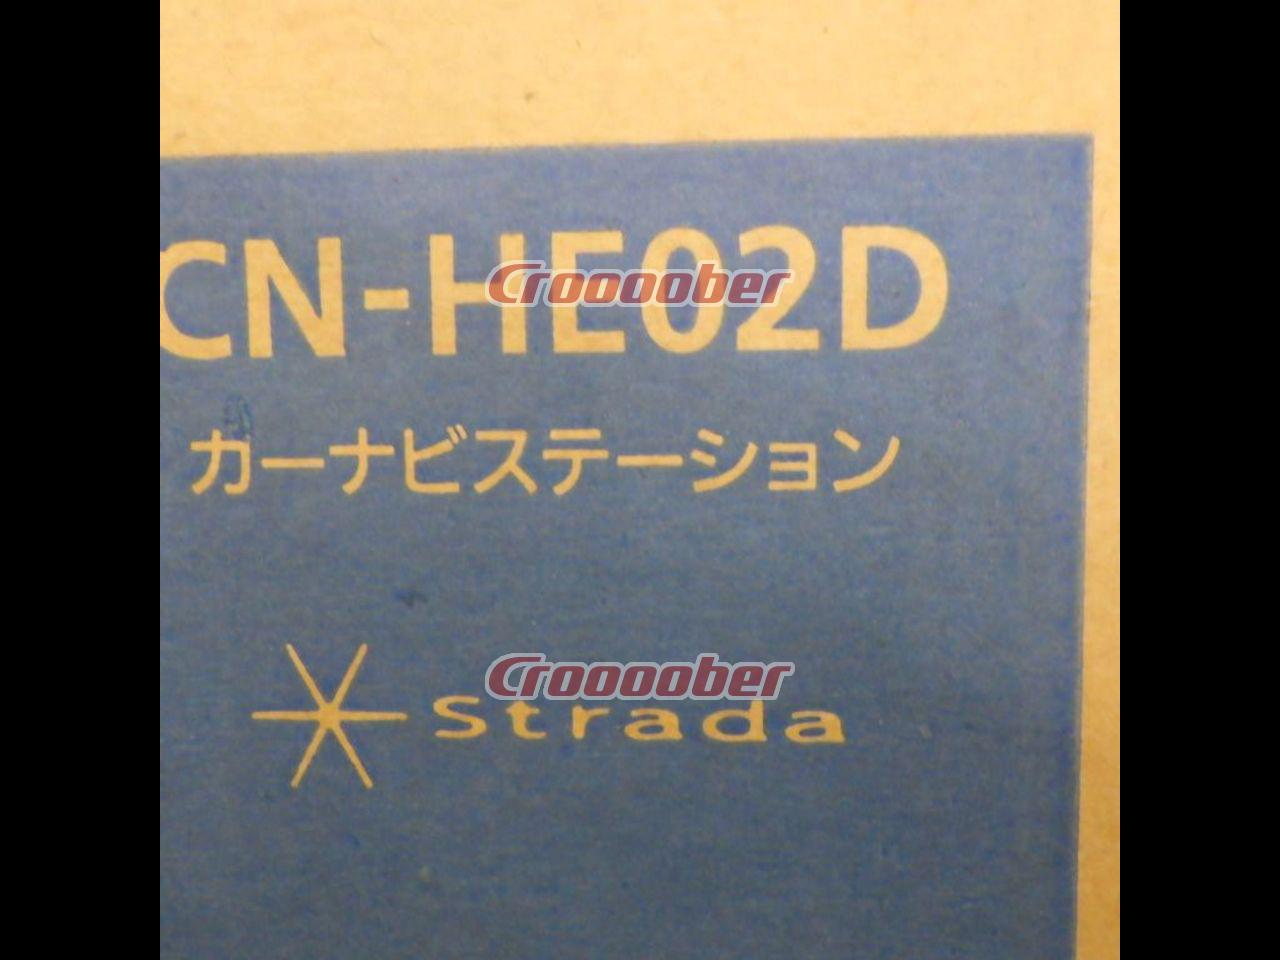 Panasonic Strada CN-HE02D 7 Inches Fullseg | Memory Navigation